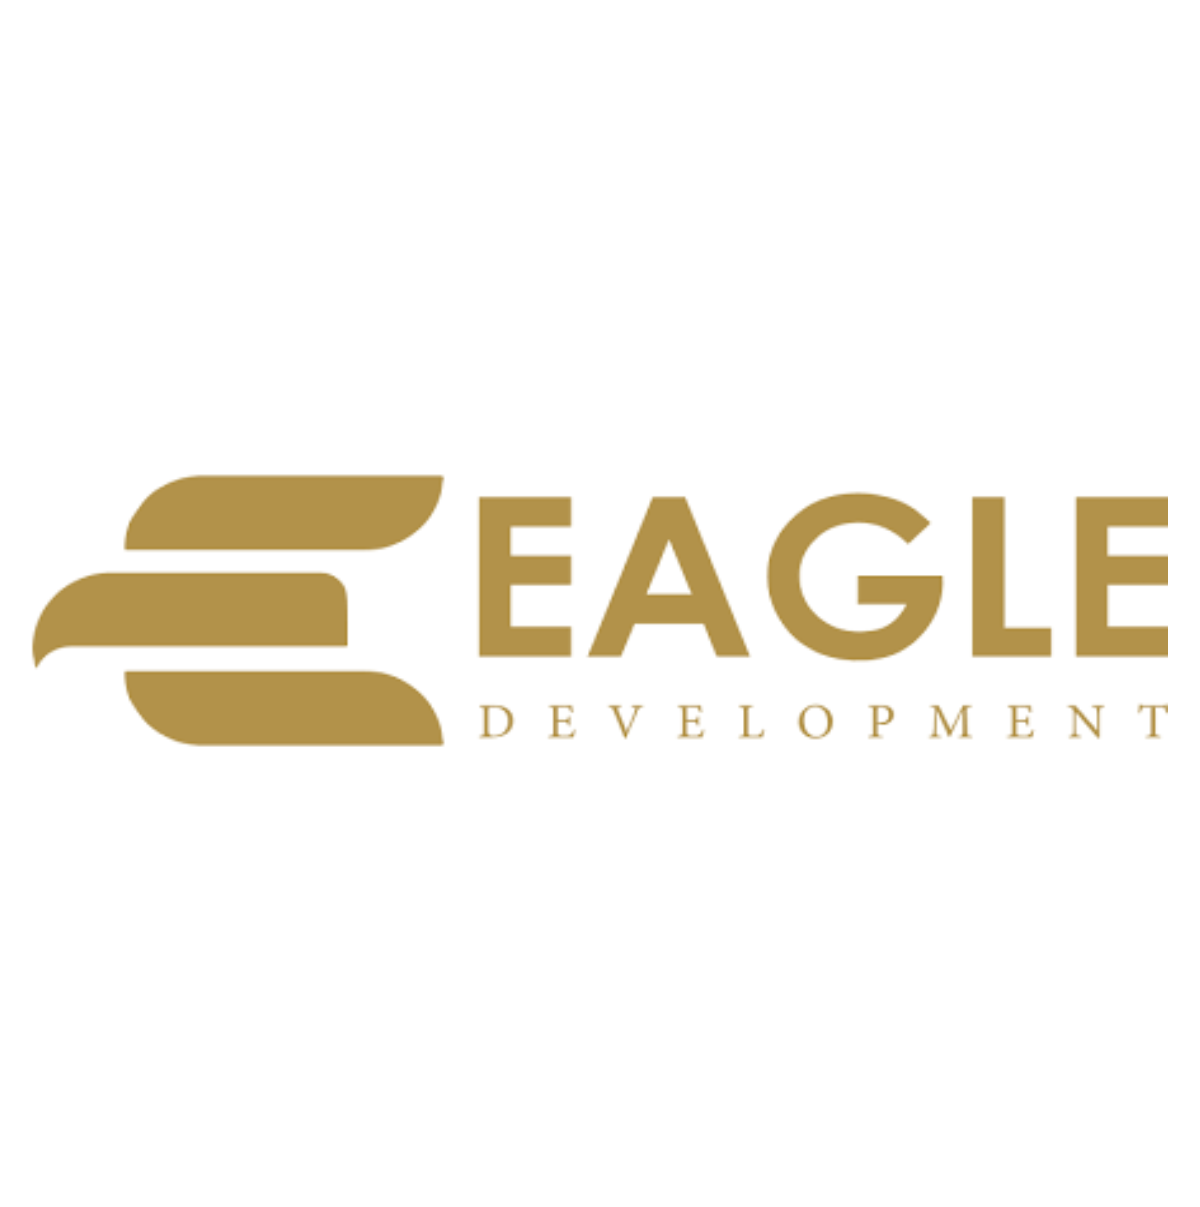 Eagle Development